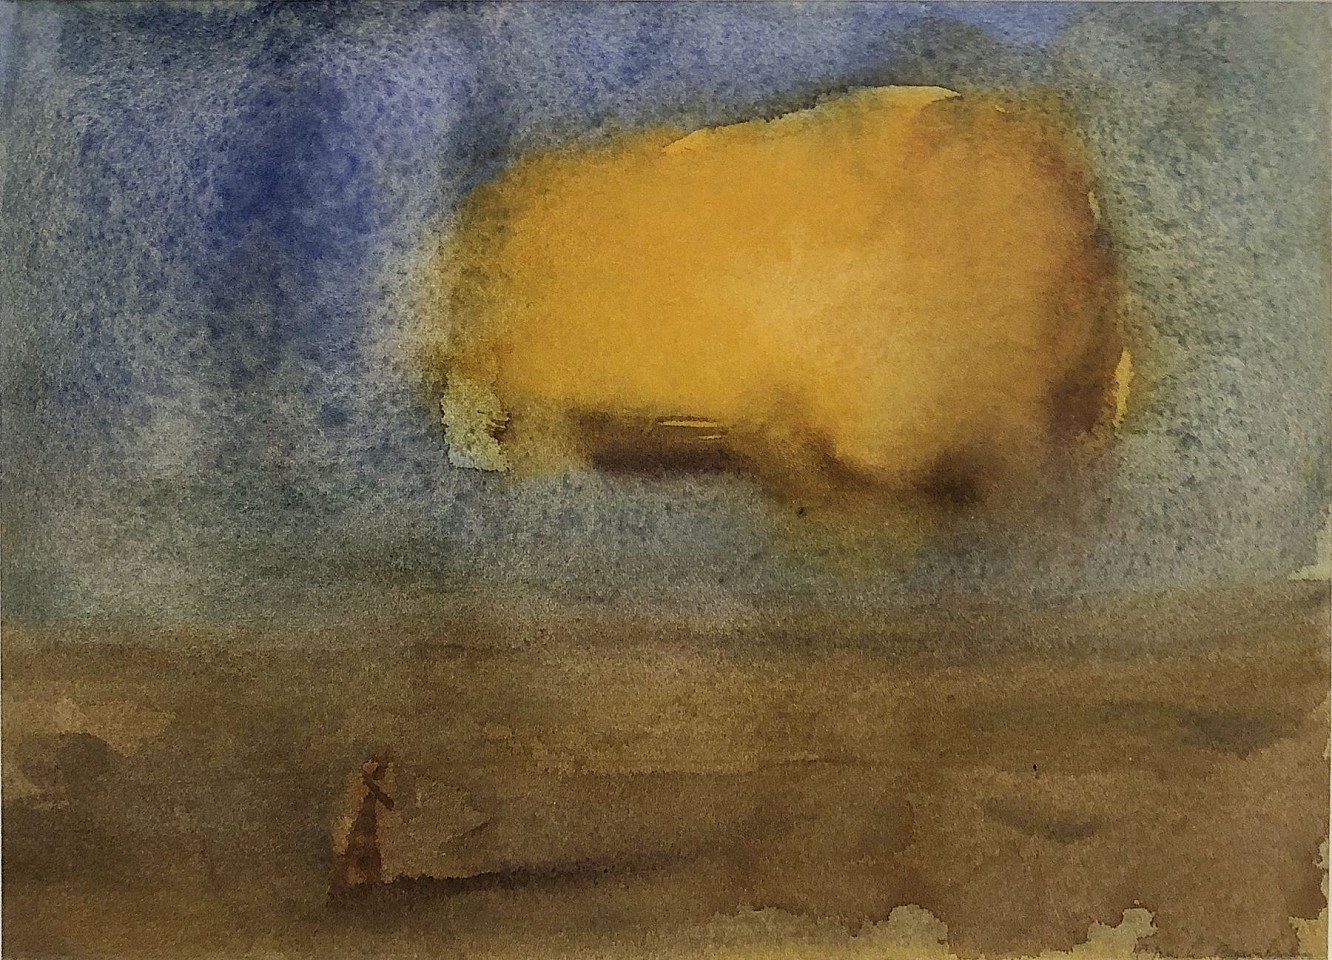 Chuck Bowdish 1959-2022, Figure & Golden Cloud
watercolor on paper, 6.25" x 8.5", 12 " x 14.25" framed
CB 329
Sold